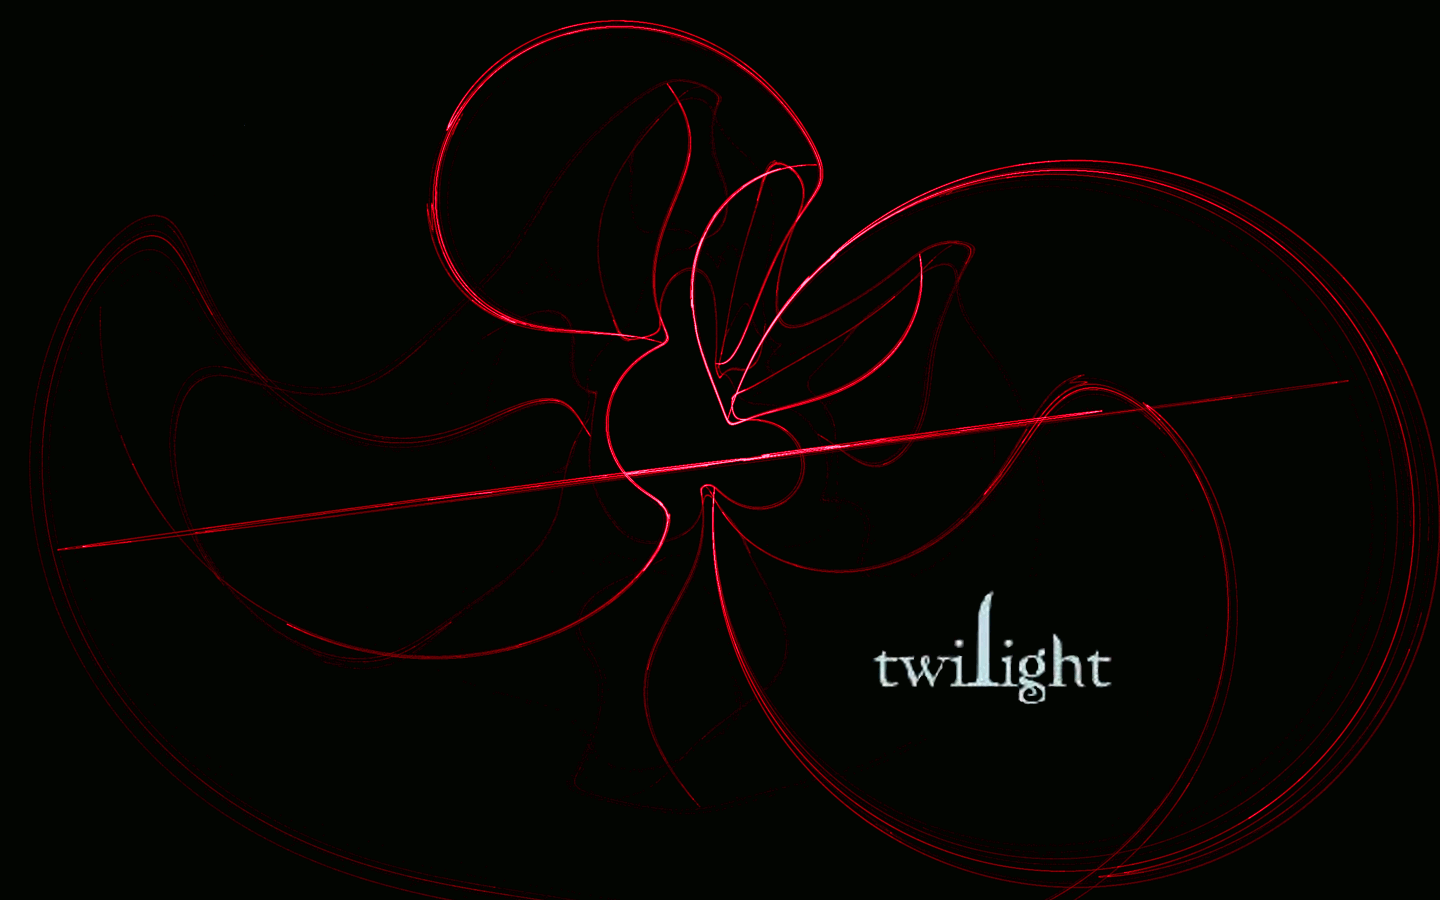 Twilight Desktop Image - Twilight Series Wallpaper 1378435 - Fanpop